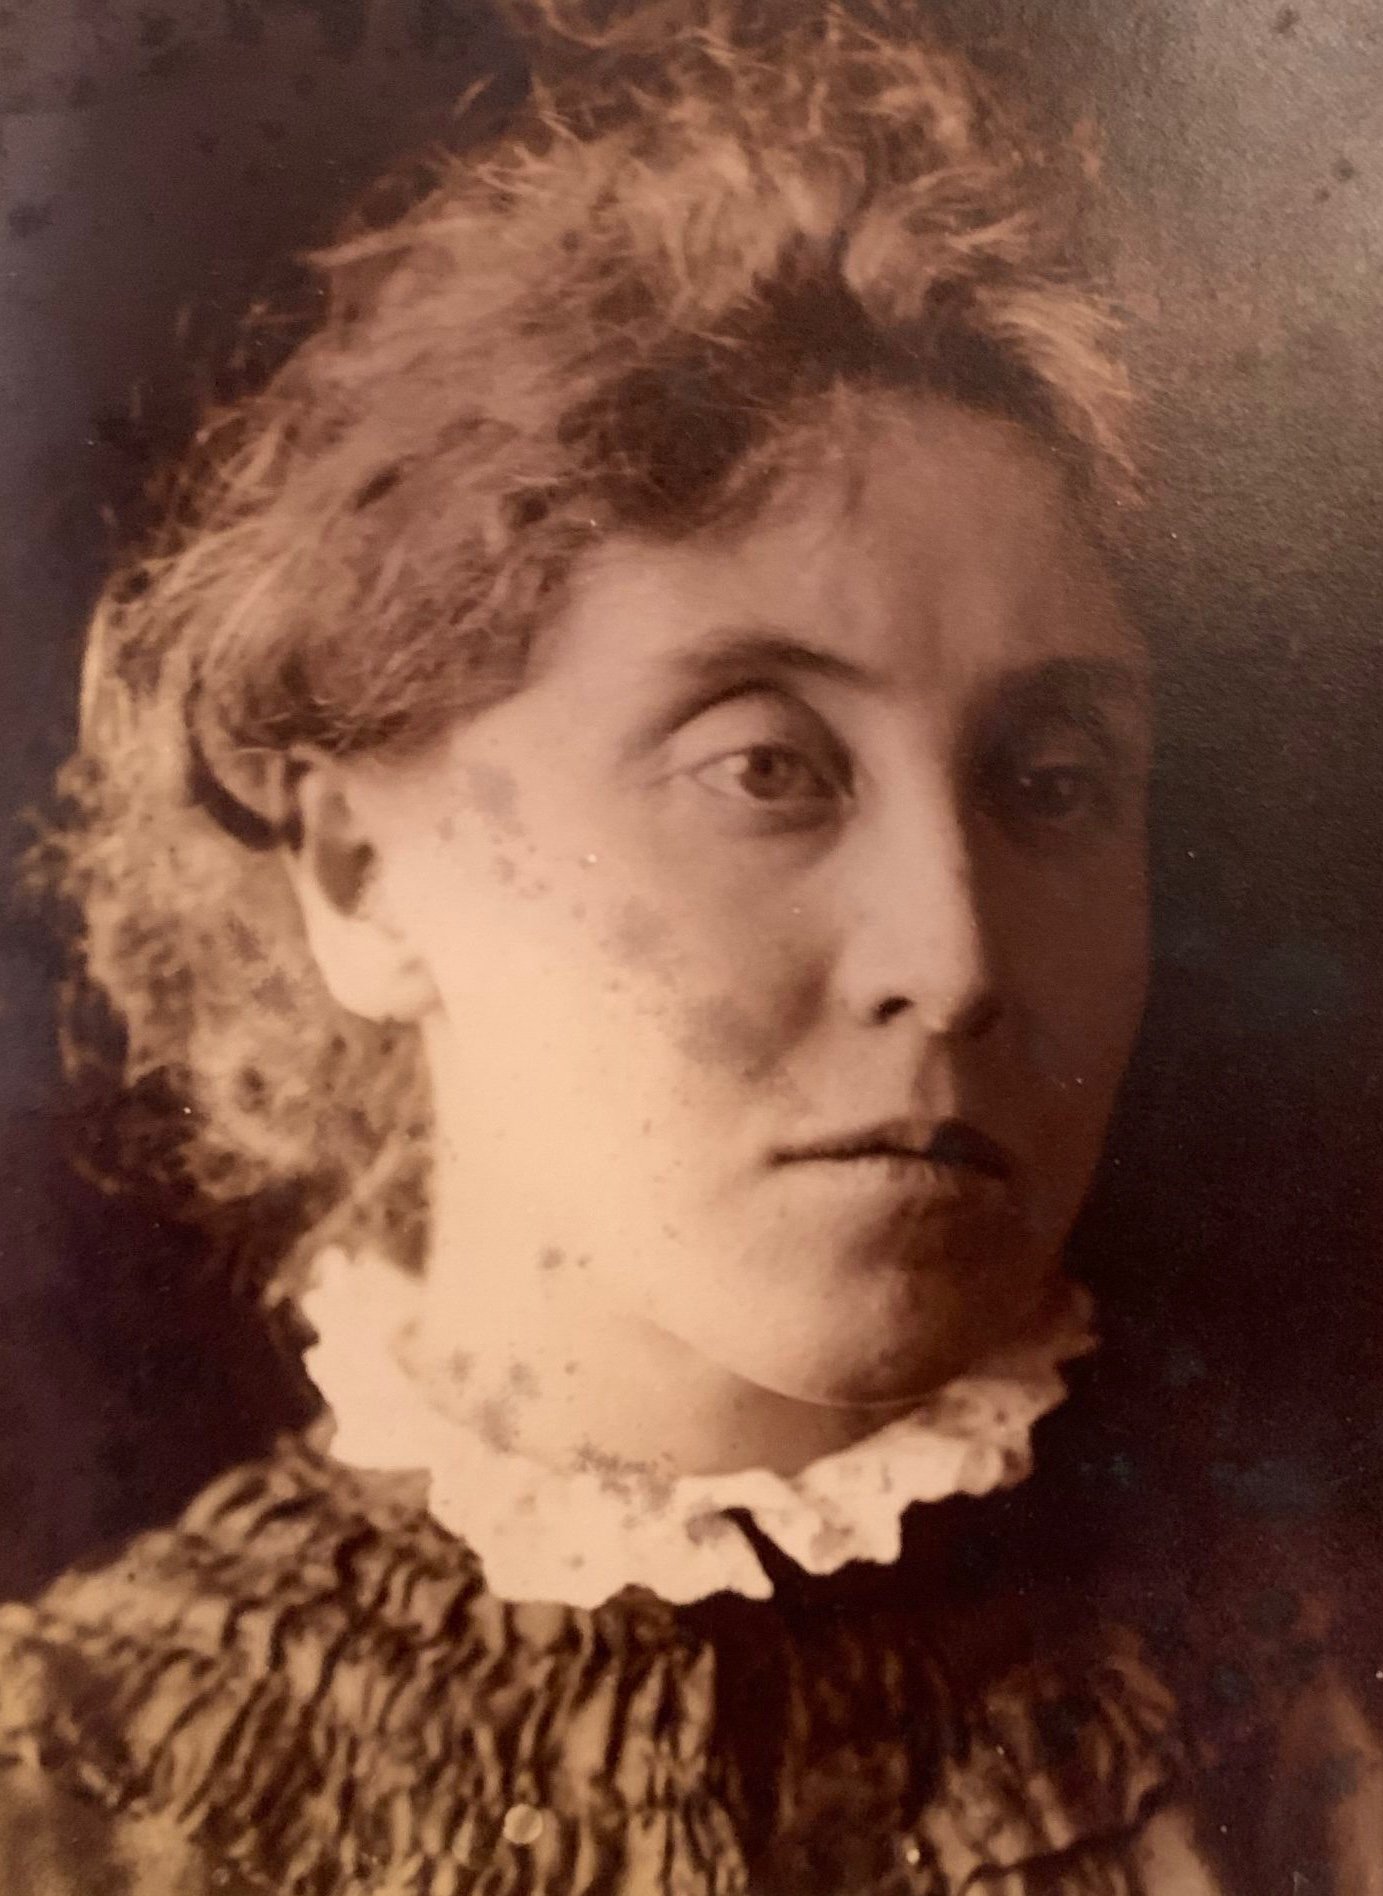 Evelyn De Morgan (c.1875)